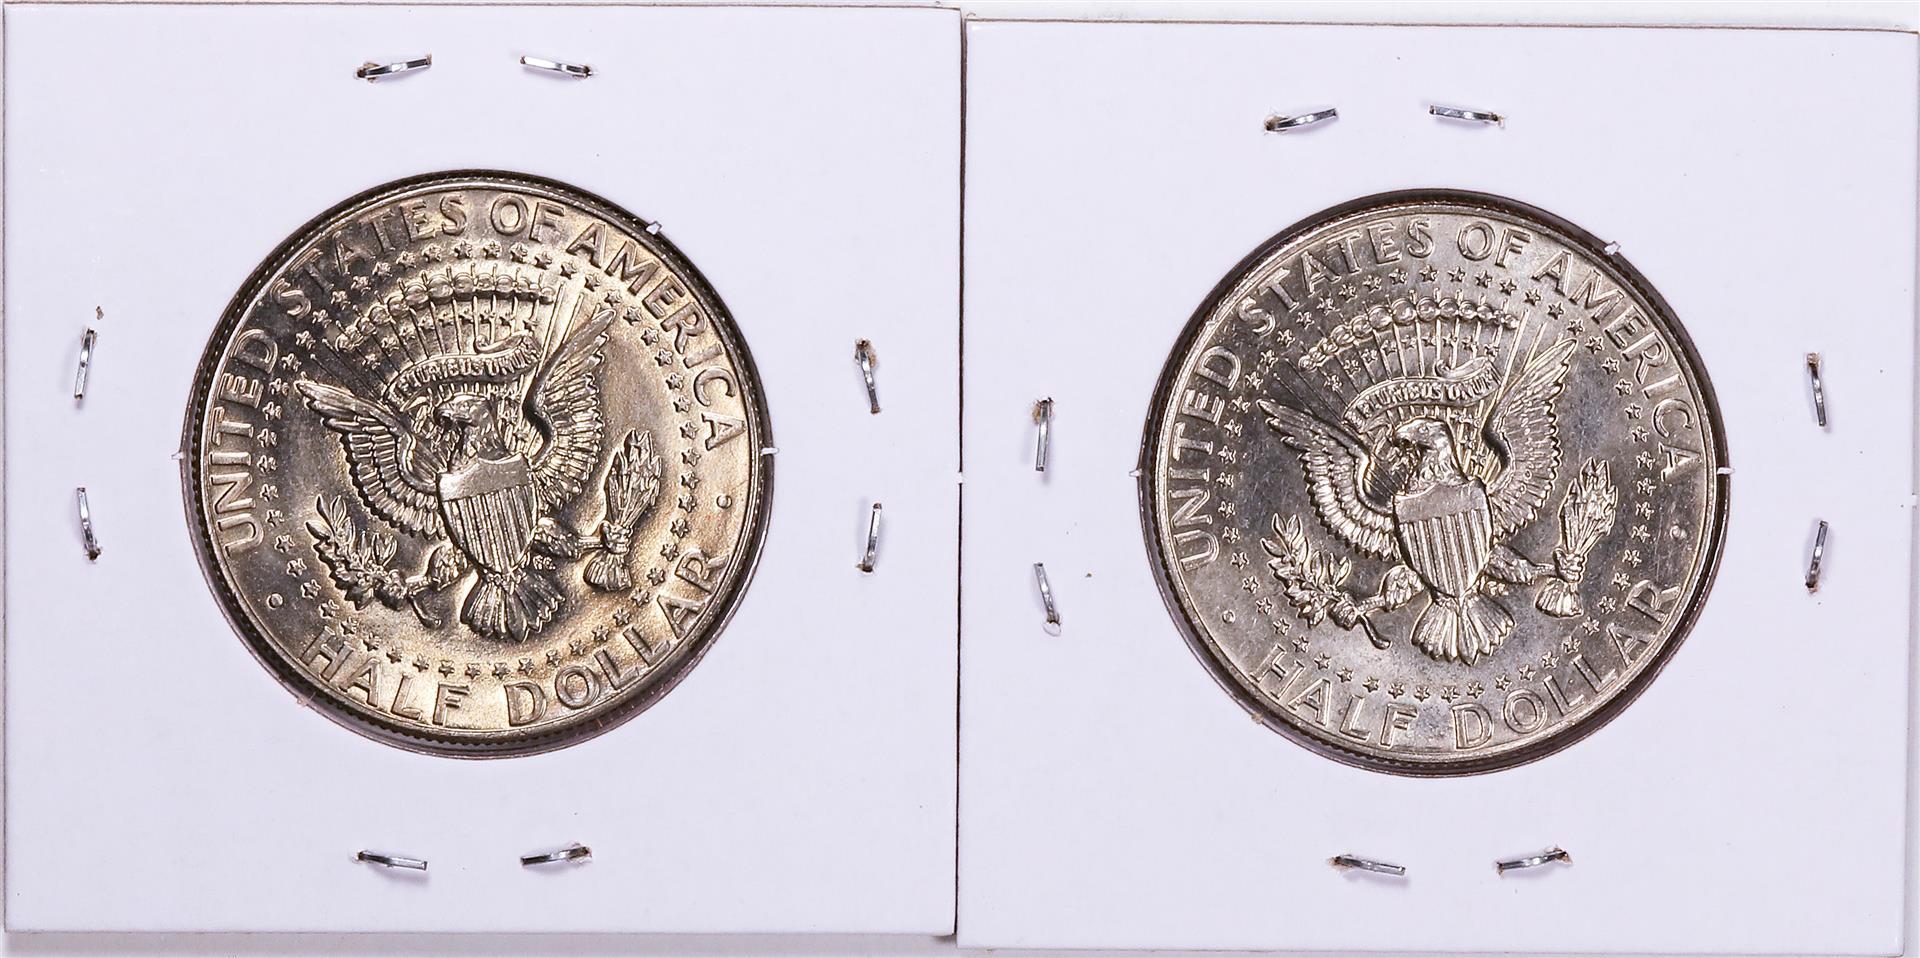 1985-1986 Kennedy Half Dollar Coin Collector's Set